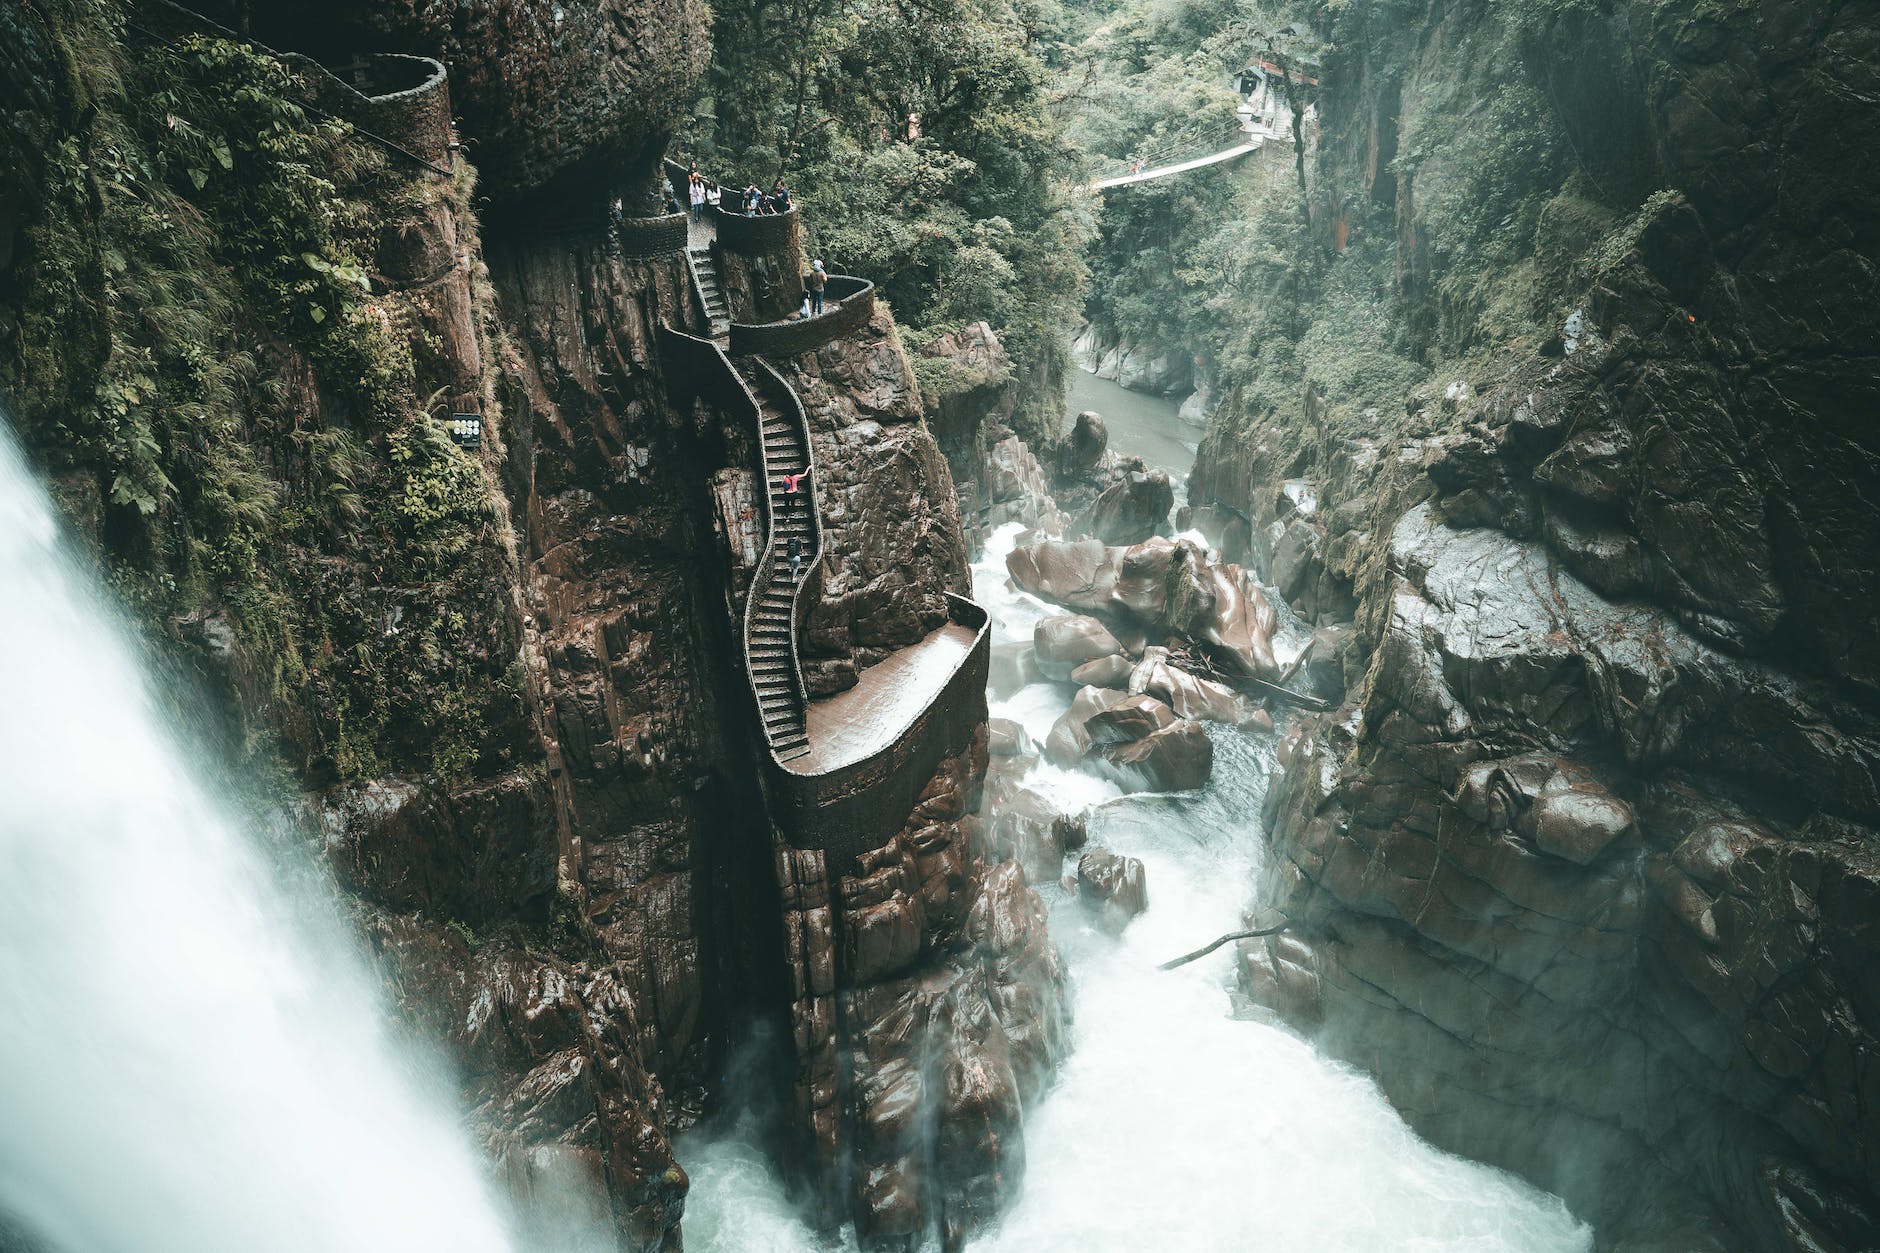 The Pailón del Diablo waterfall, near Baños (Photo by Shad Meeg on Pexels.com).